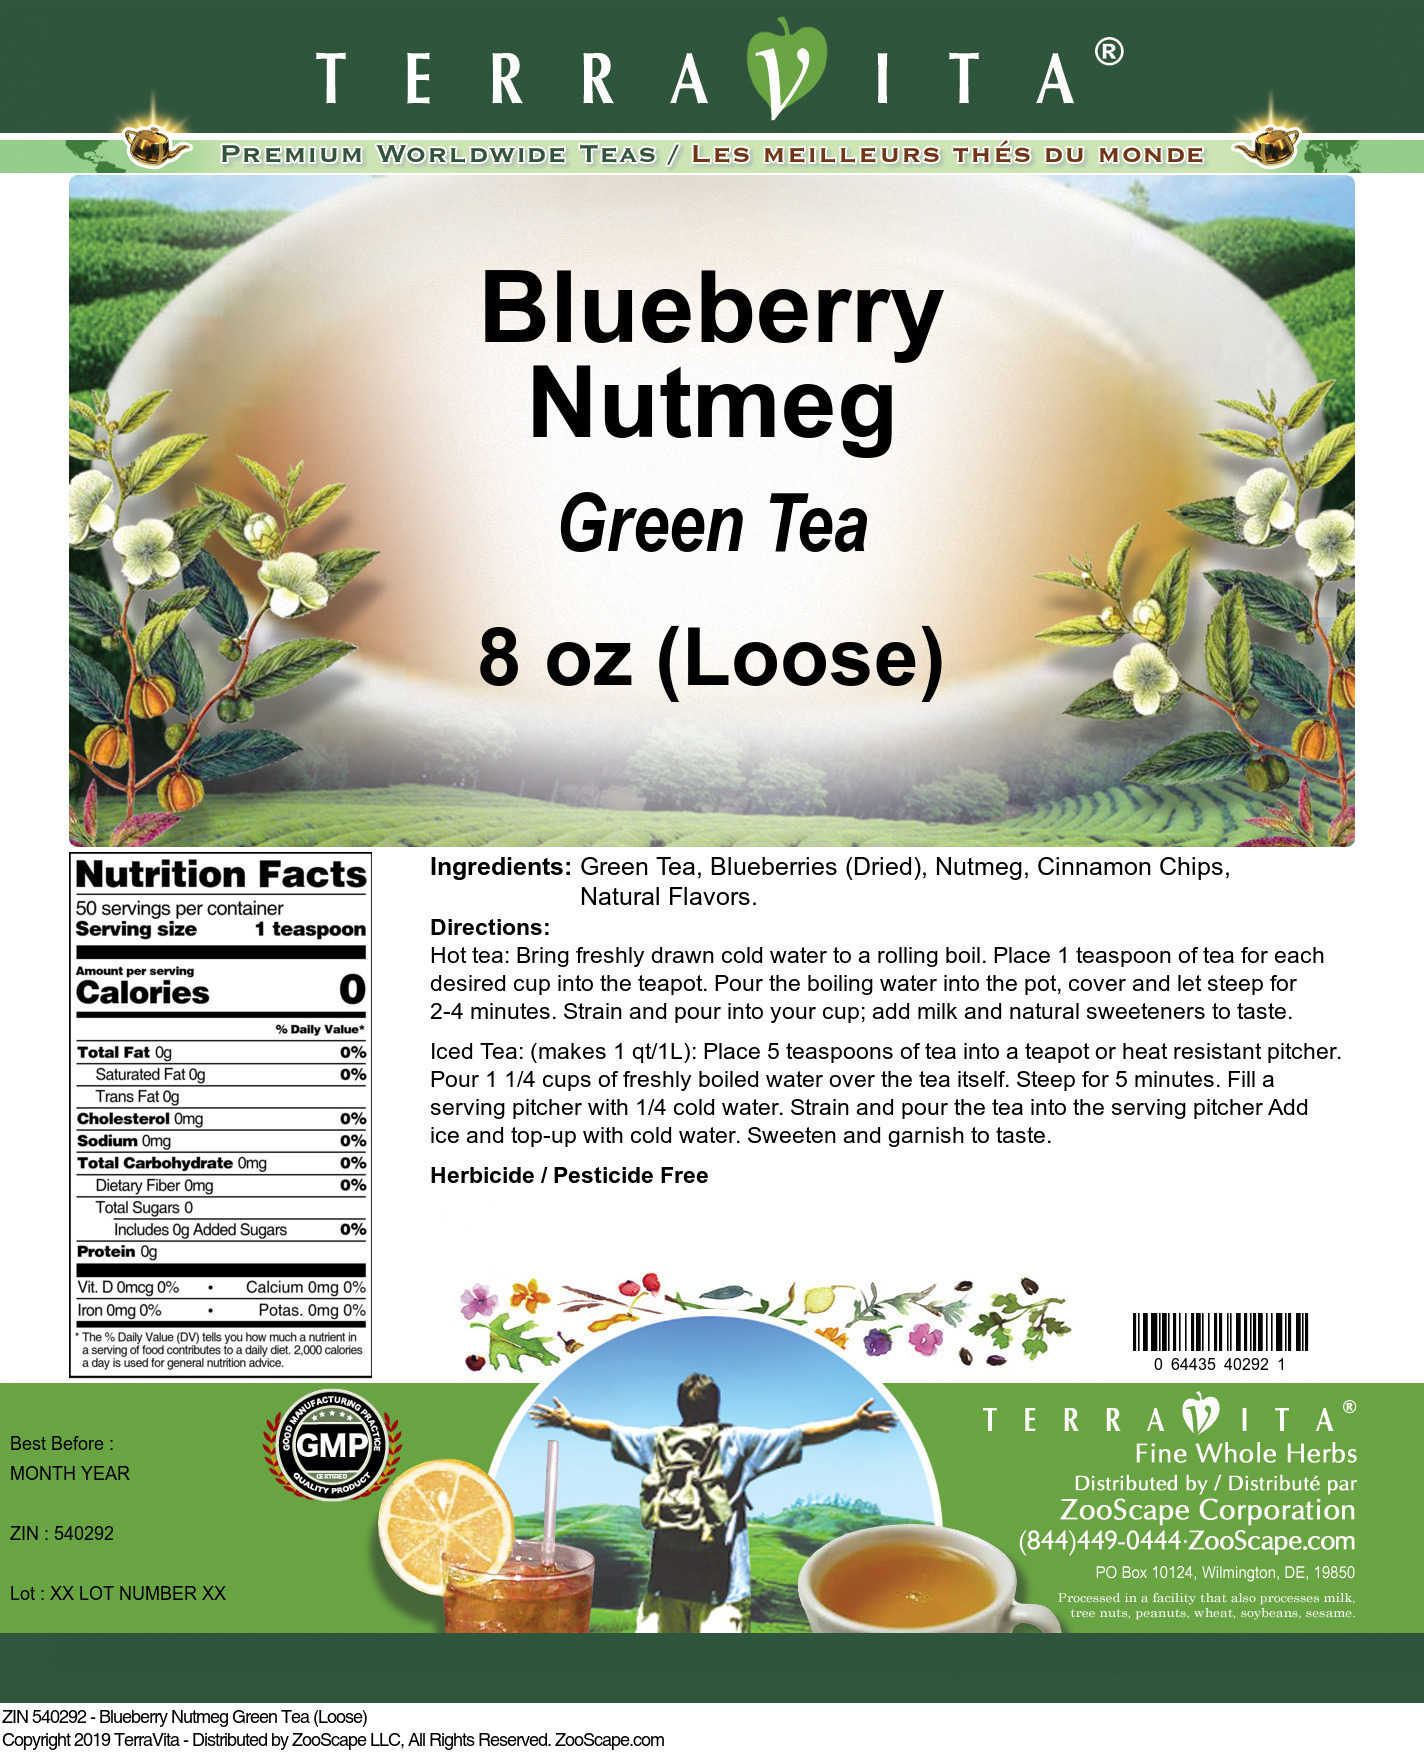 Blueberry Nutmeg Green Tea (Loose) - Label